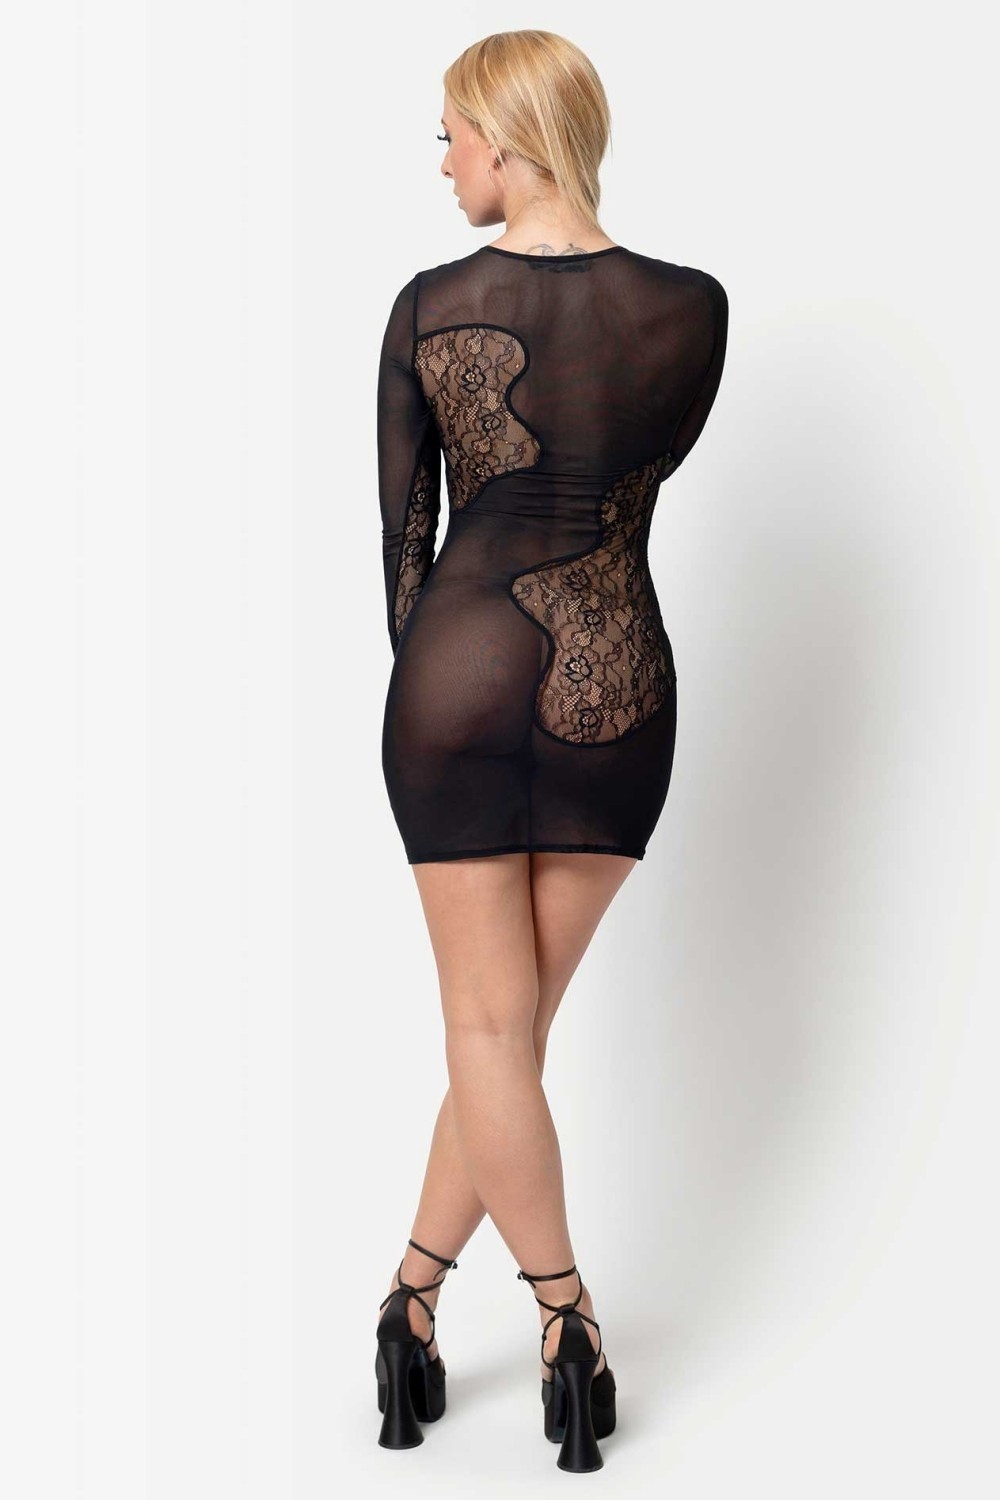 Sourmiou, long sleeves mesh dress - Patrice Catanzaro Official Website